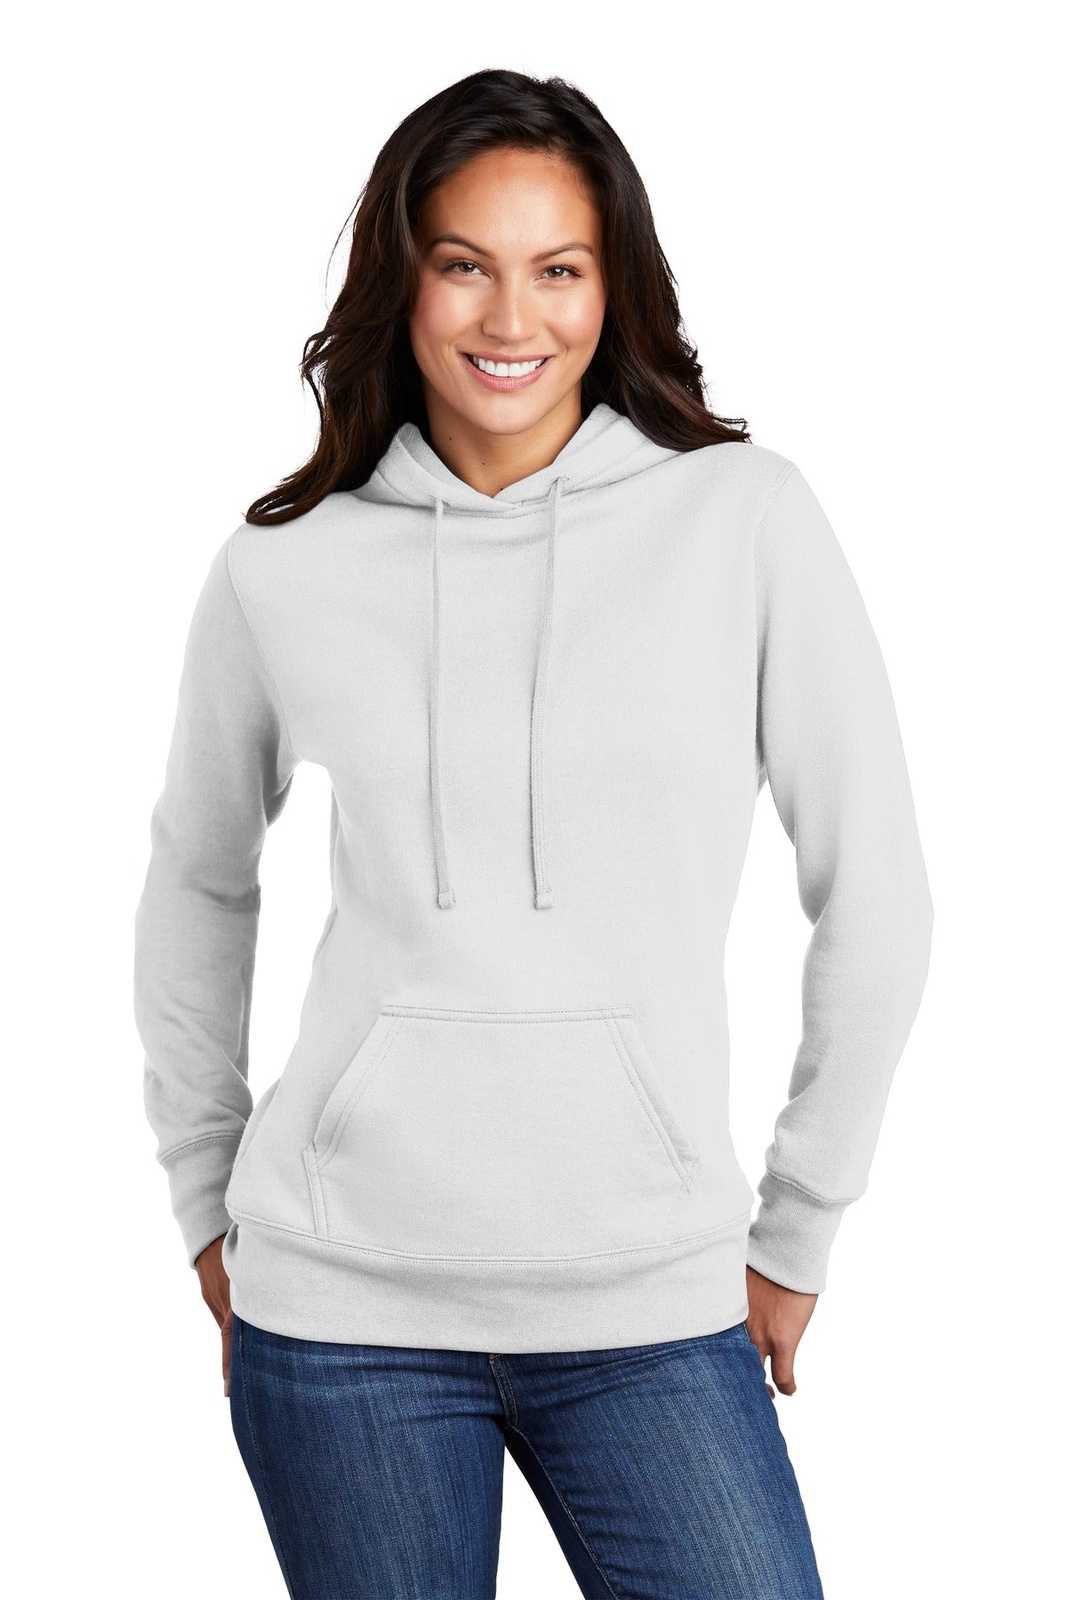 Port & Company LPC78H Ladies Core Fleece Pullover Hooded Sweatshirt - White - HIT a Double - 1